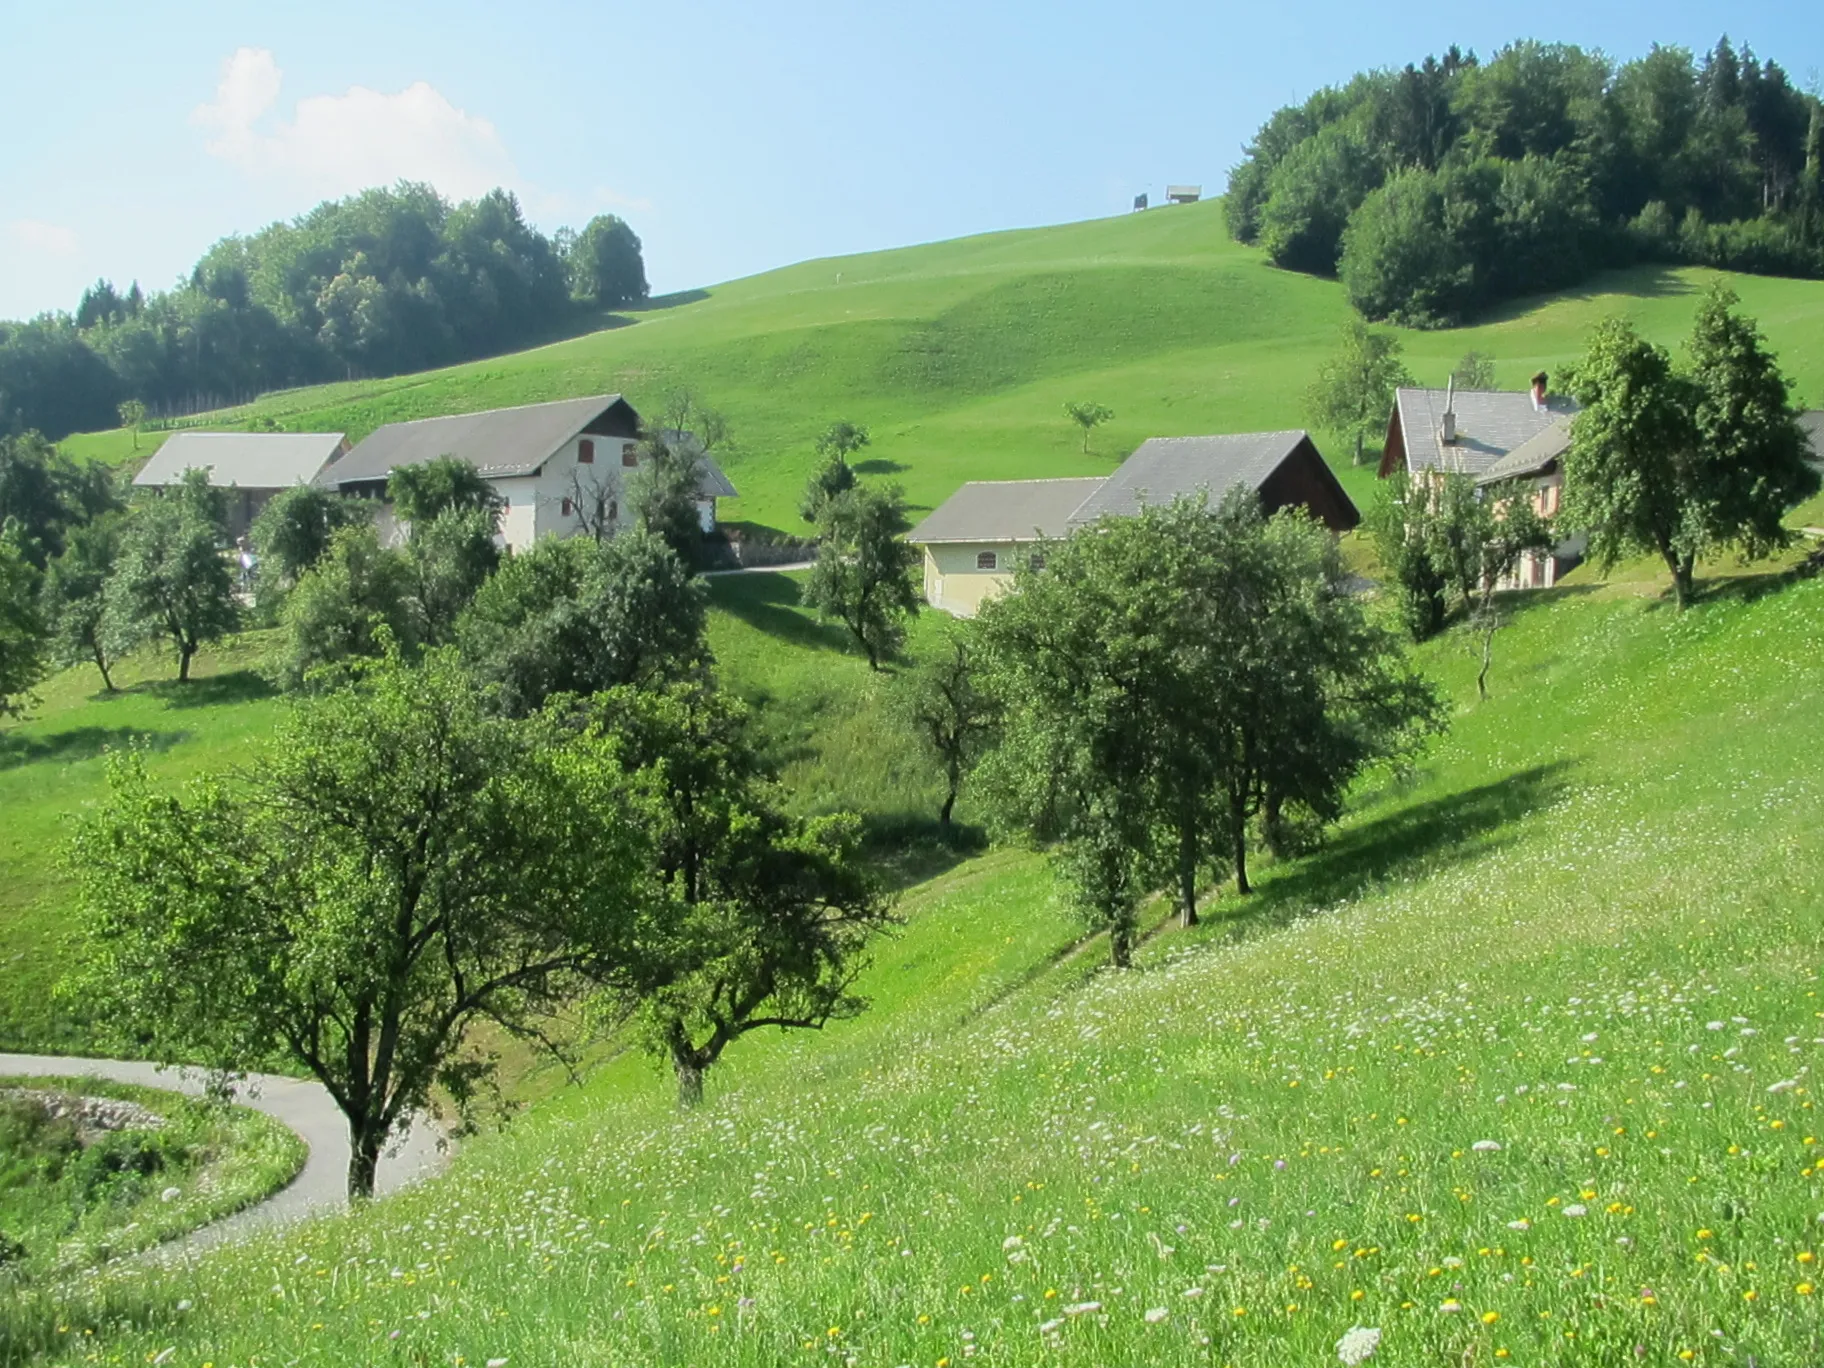 Photo showing: The Dolinec farm in Bukov Vrh nad Visokim, Municipality of Škofja Loka, Slovenia